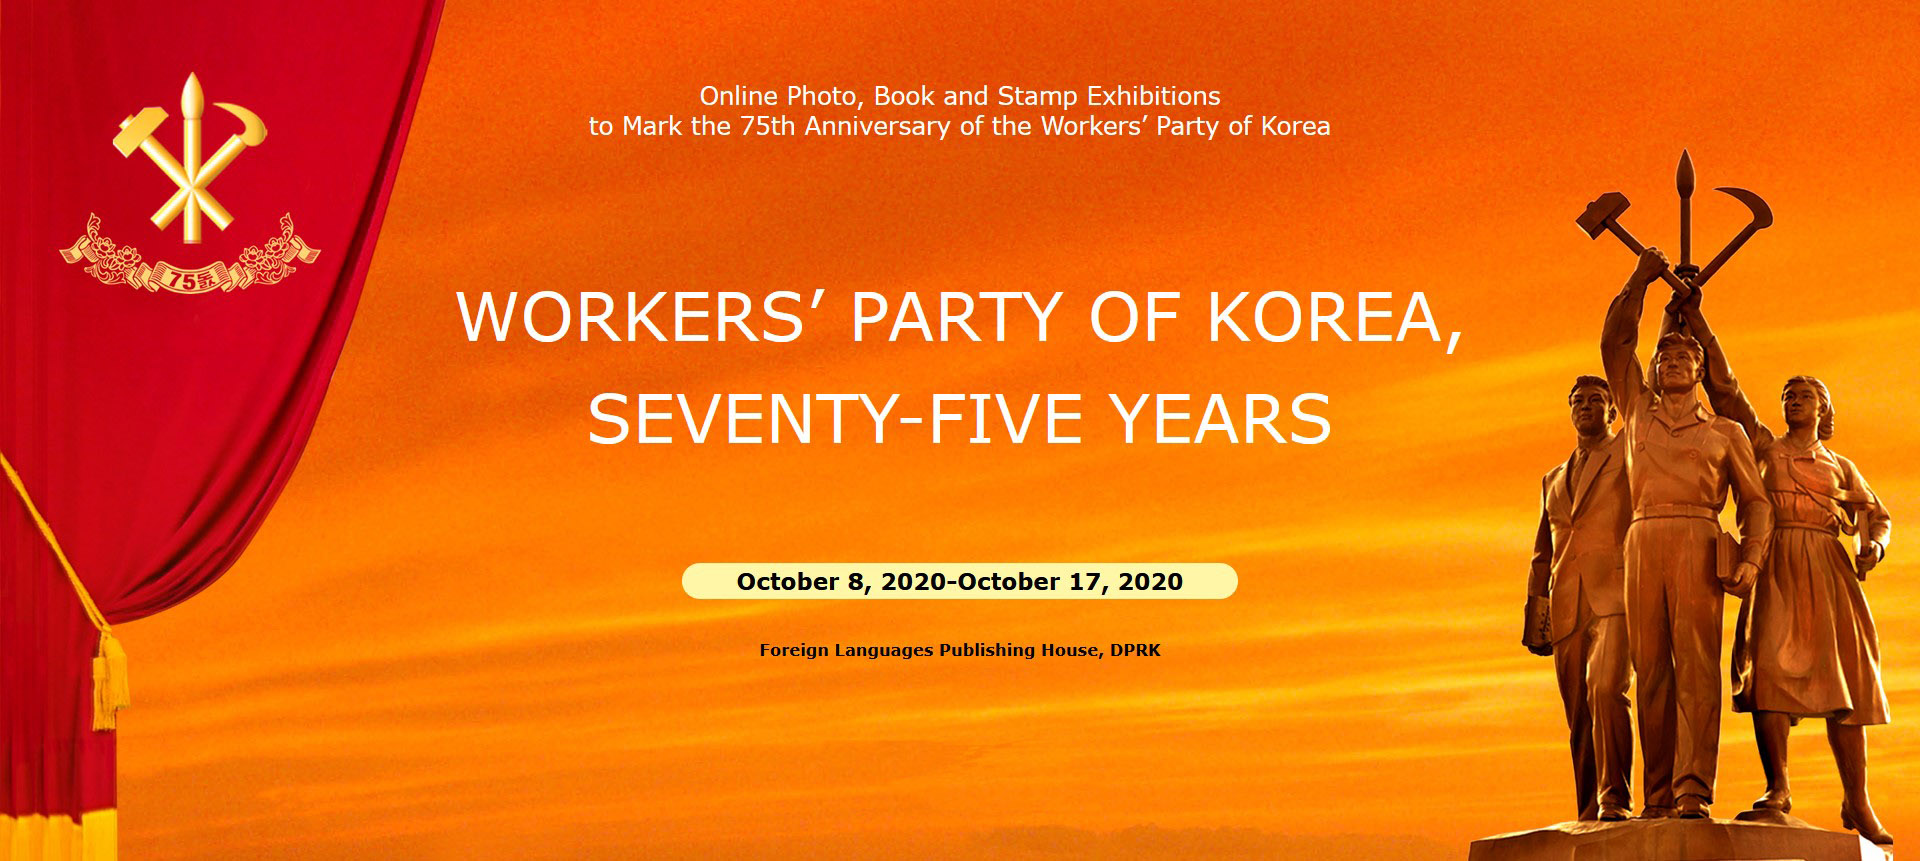 Kawankorea.com, 8th-17th Oct